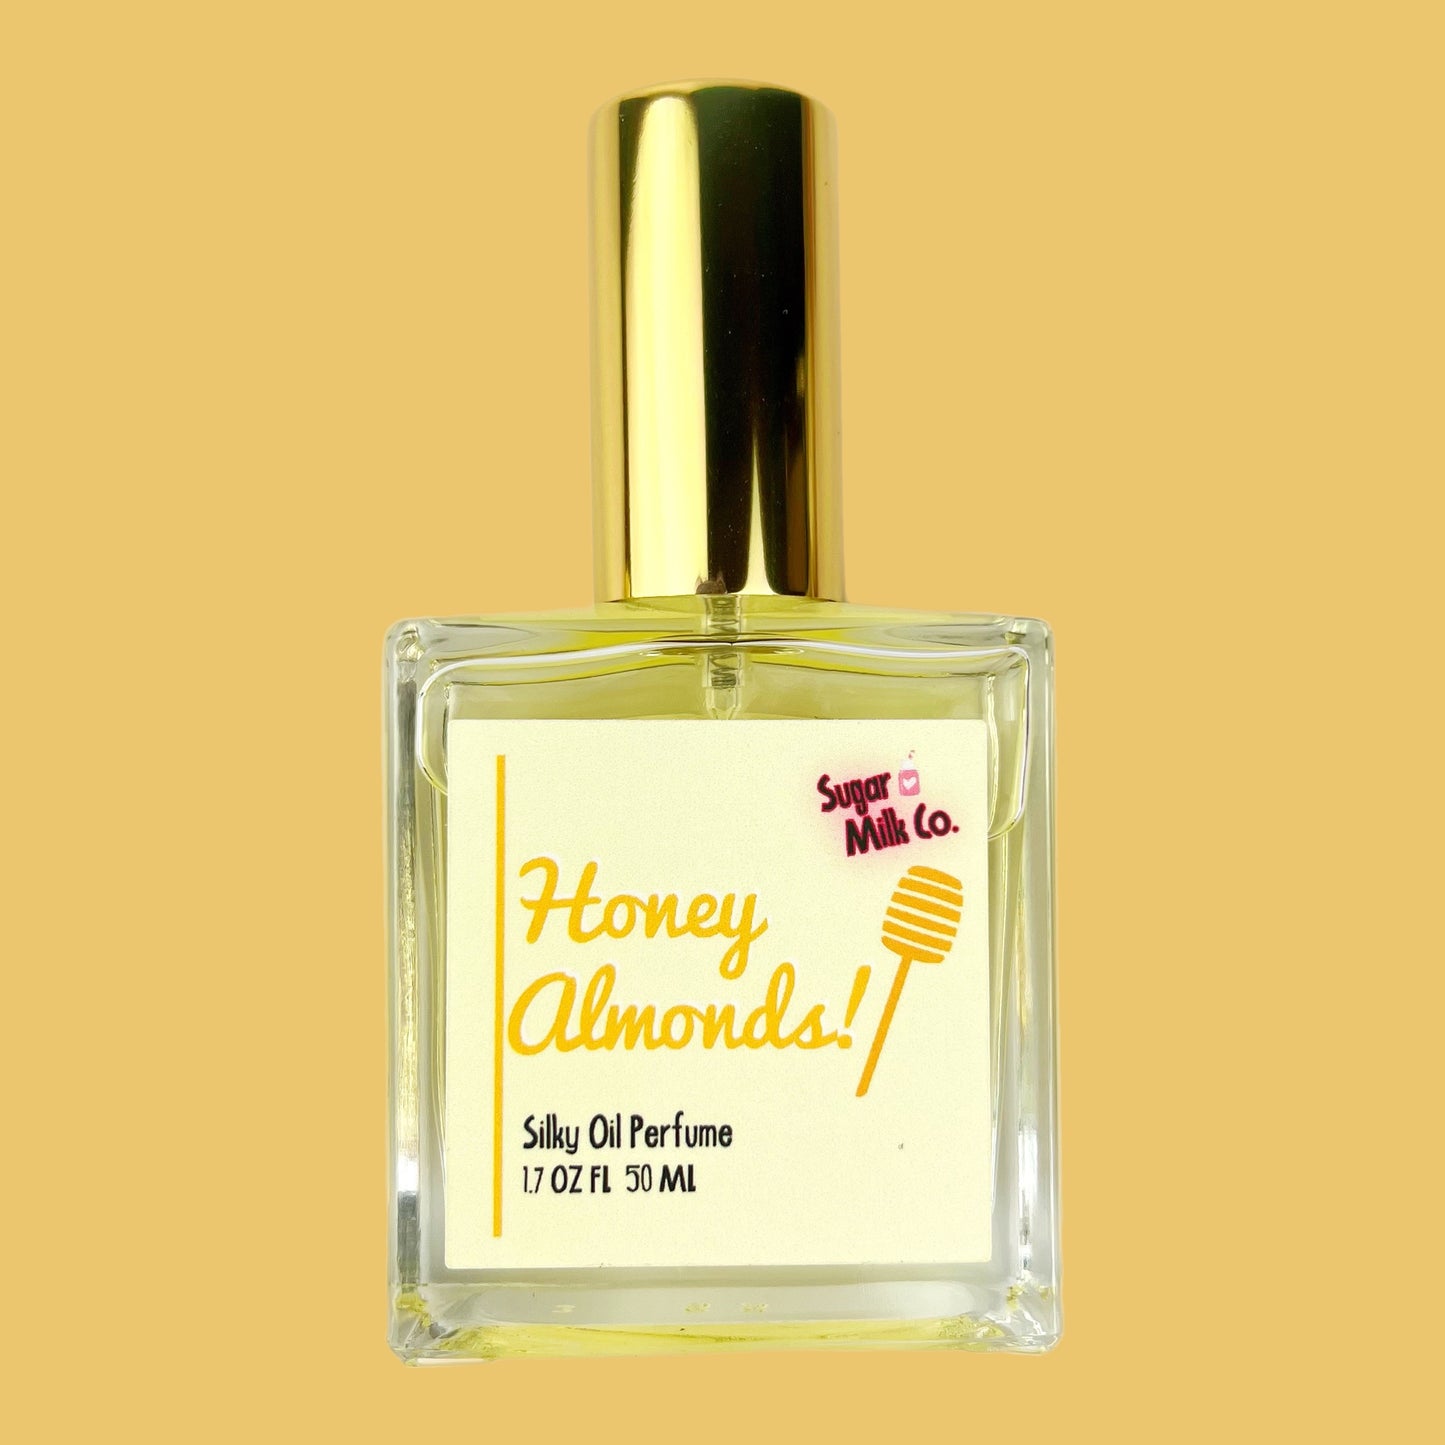 Honey Almonds Perfume Oil